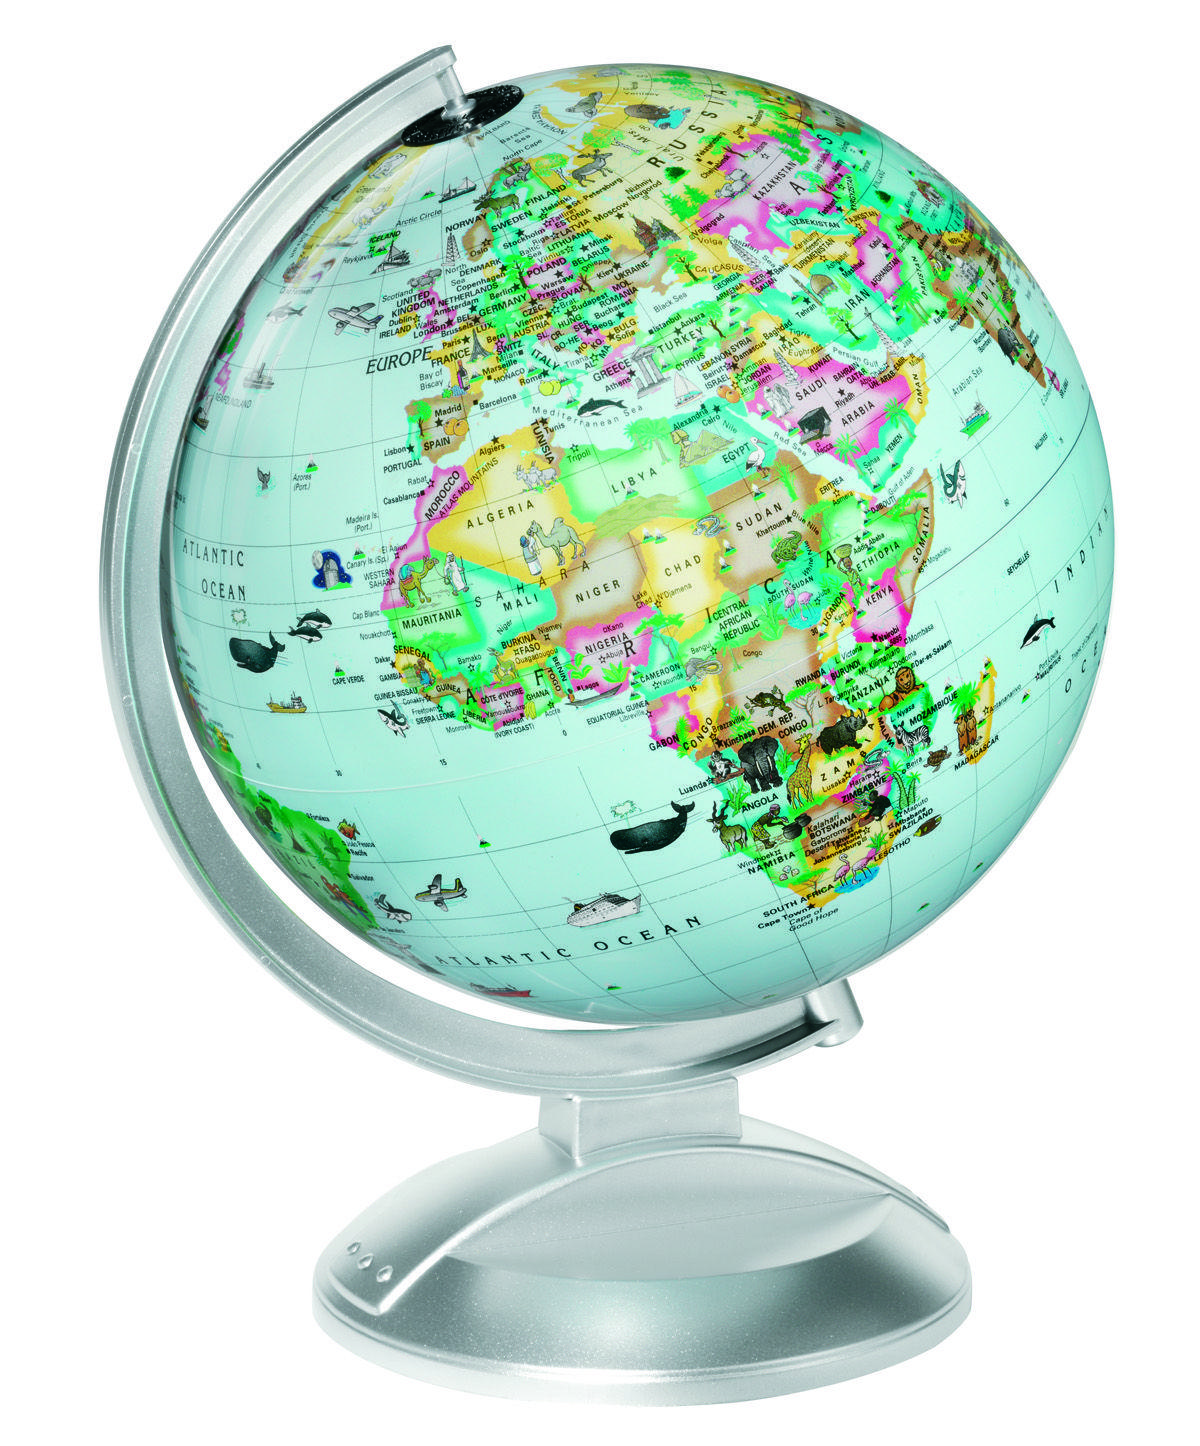 2 Globes Logo - Replogle Globes - Image Library for Globe Manufacturer, Replogle ...